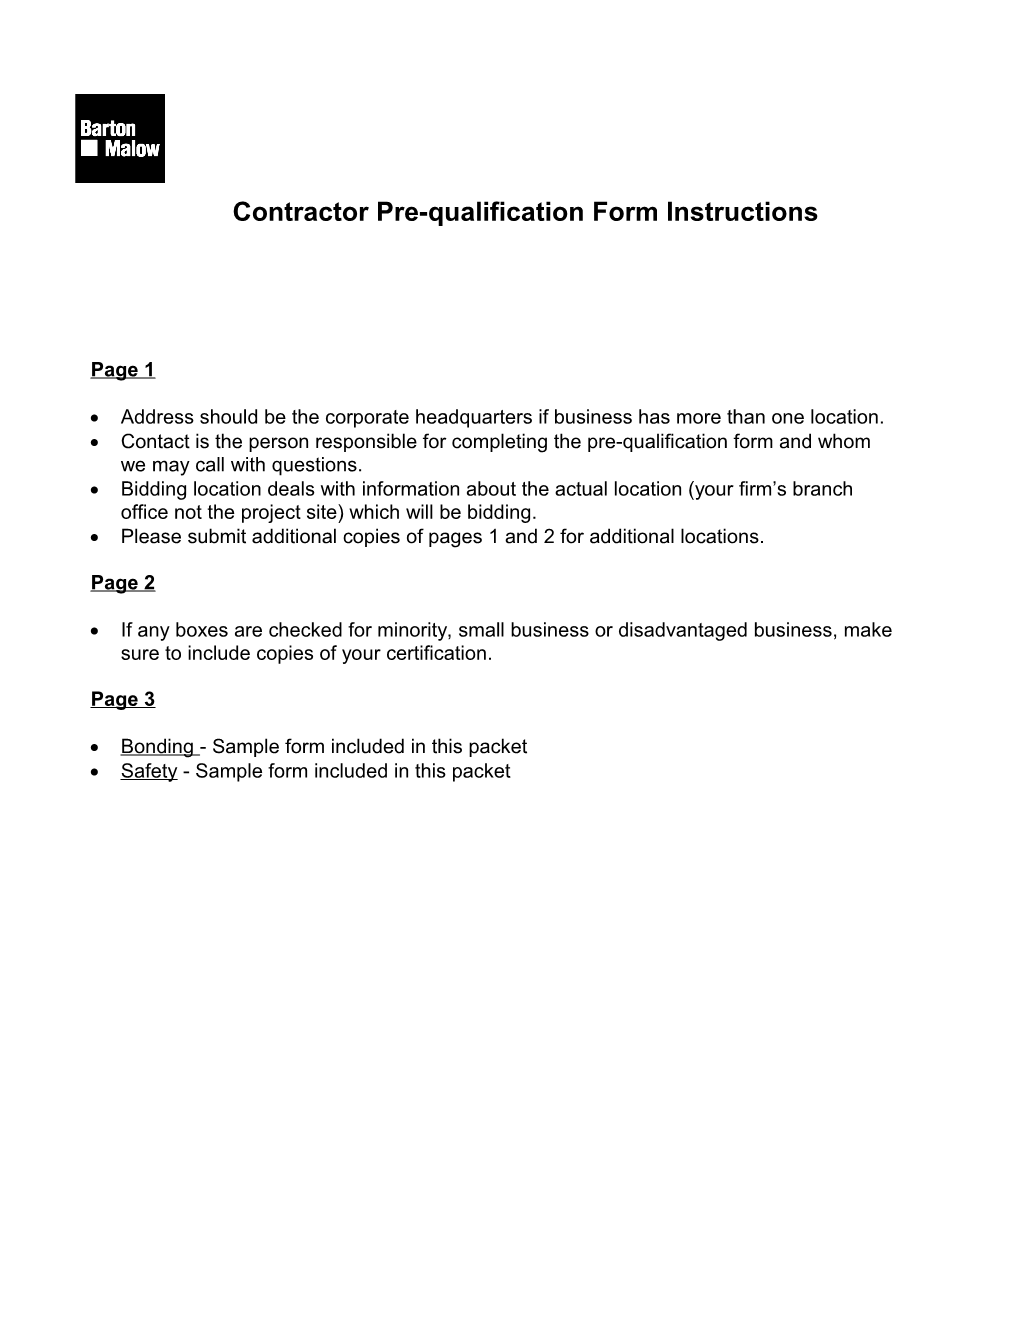 Subcontractor/Vendor/Professional Services